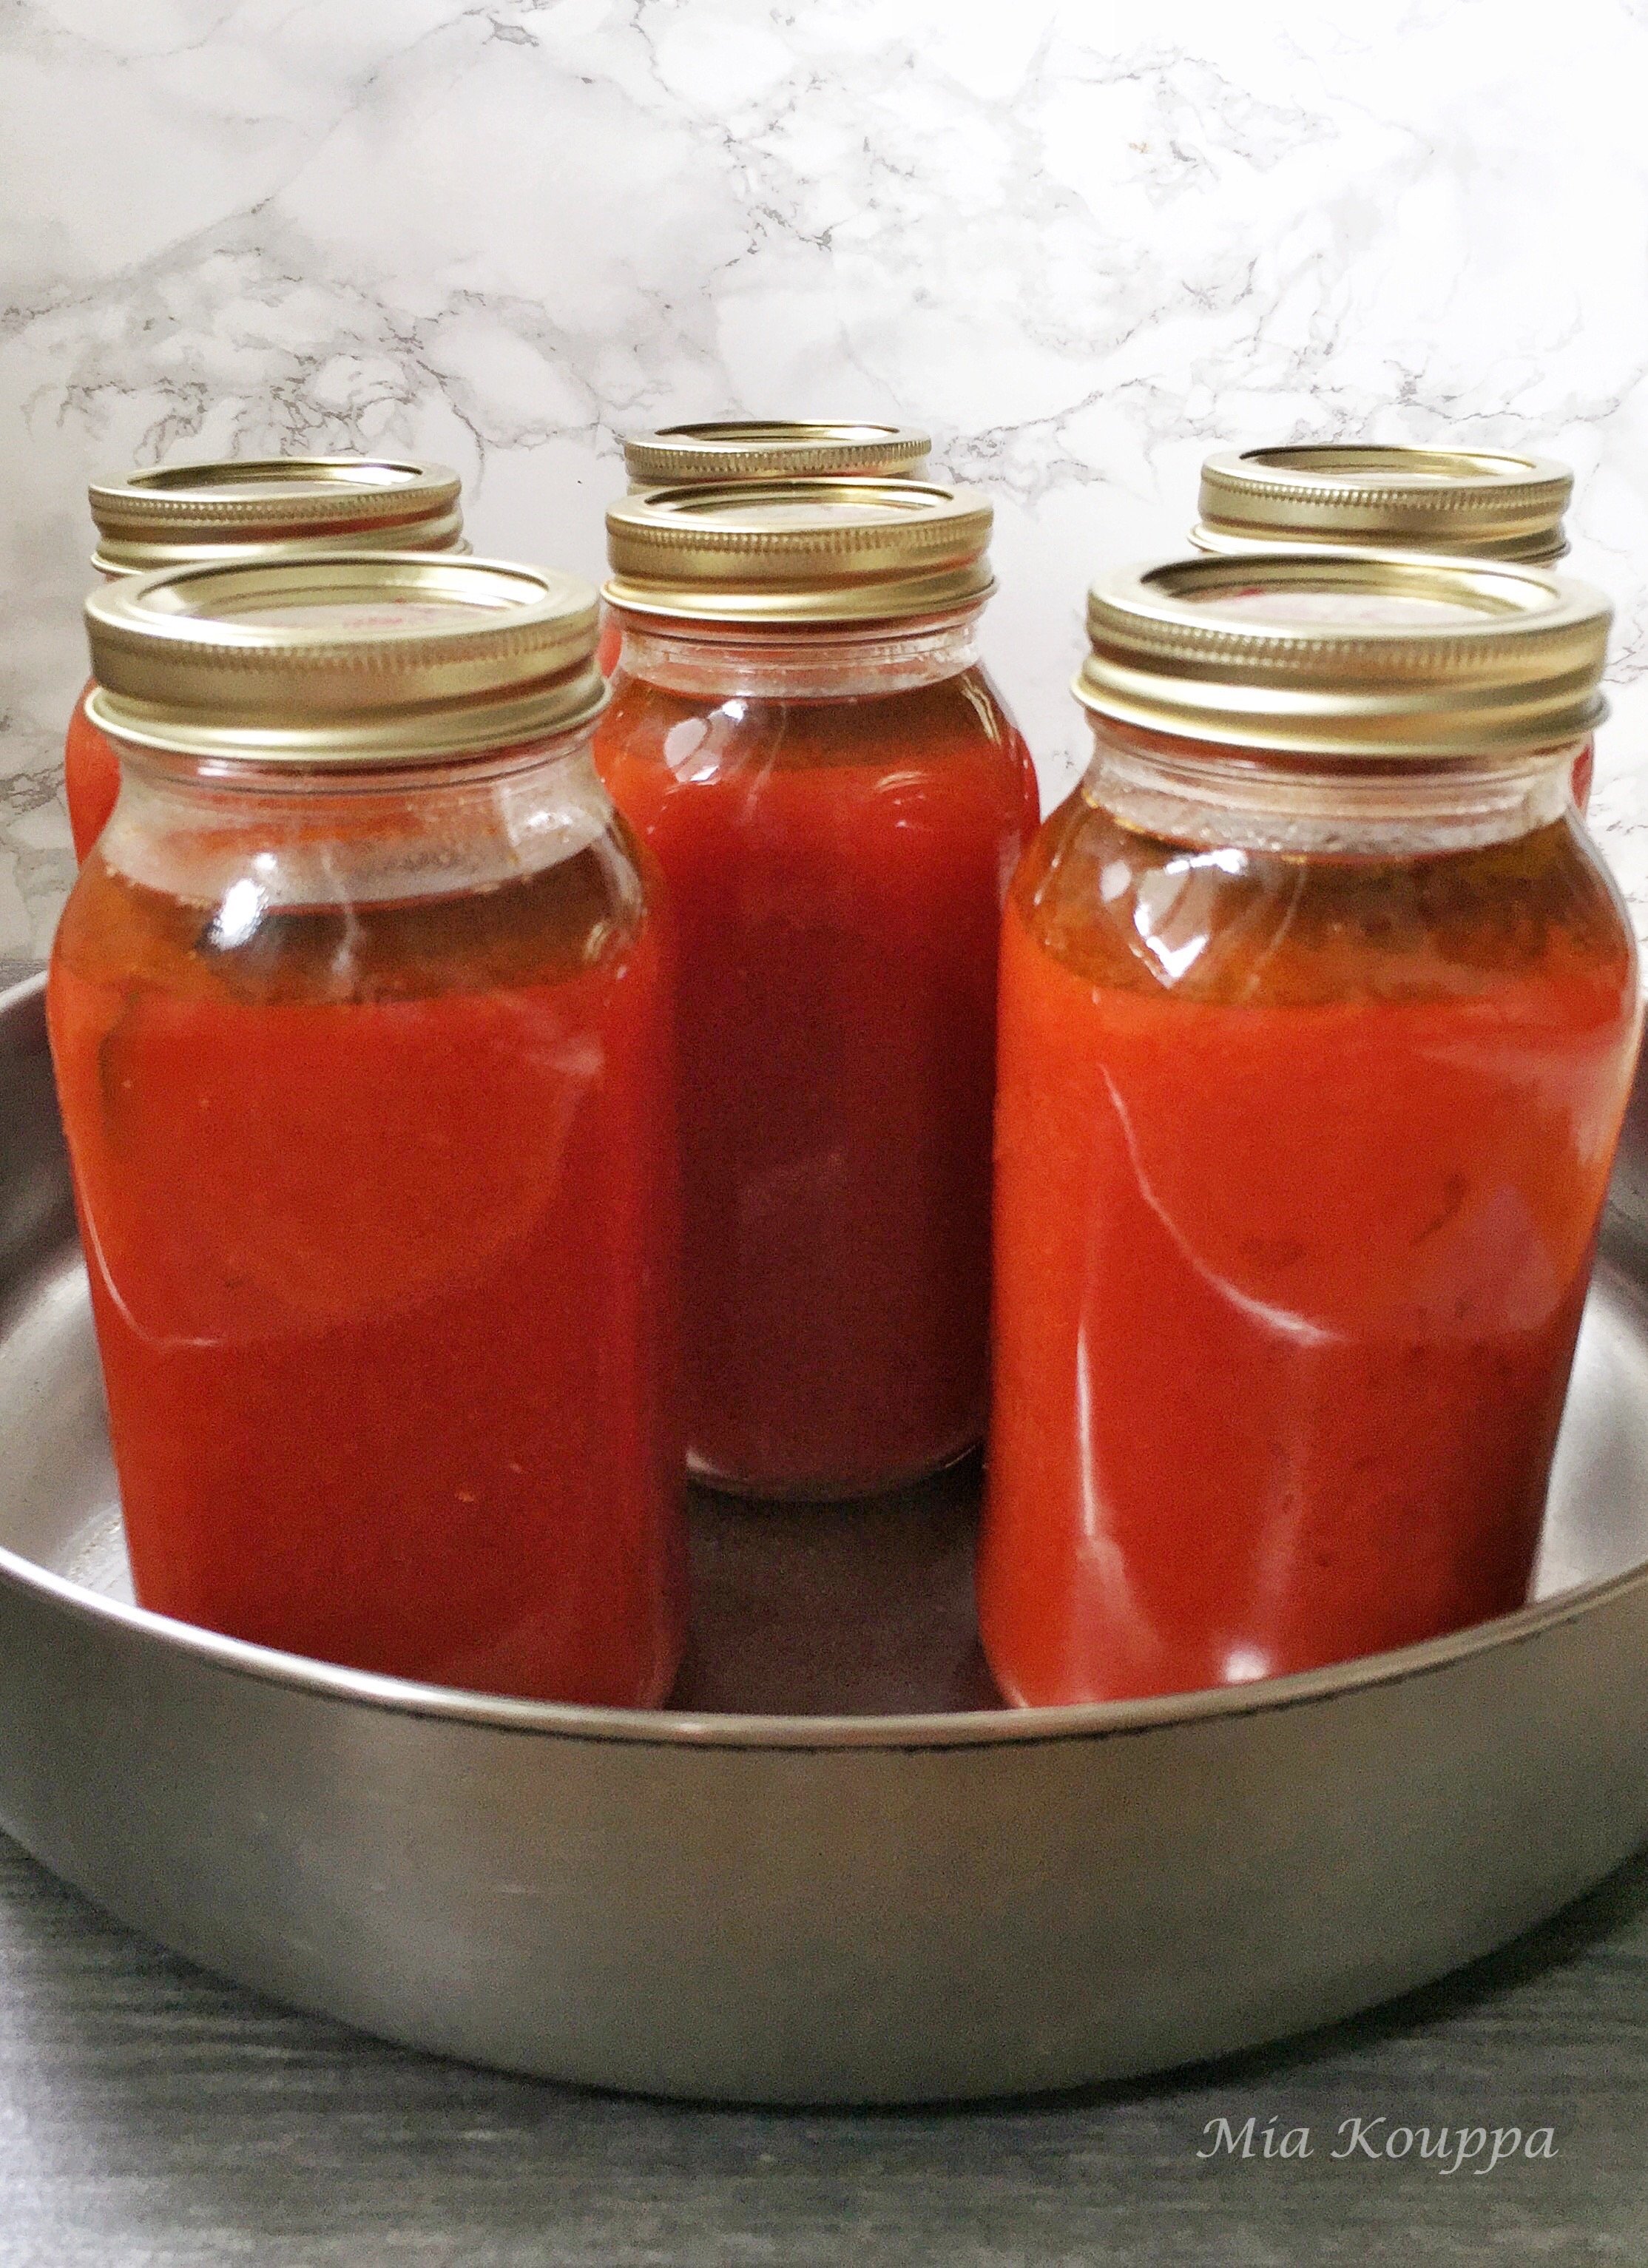 Making tomato sauce